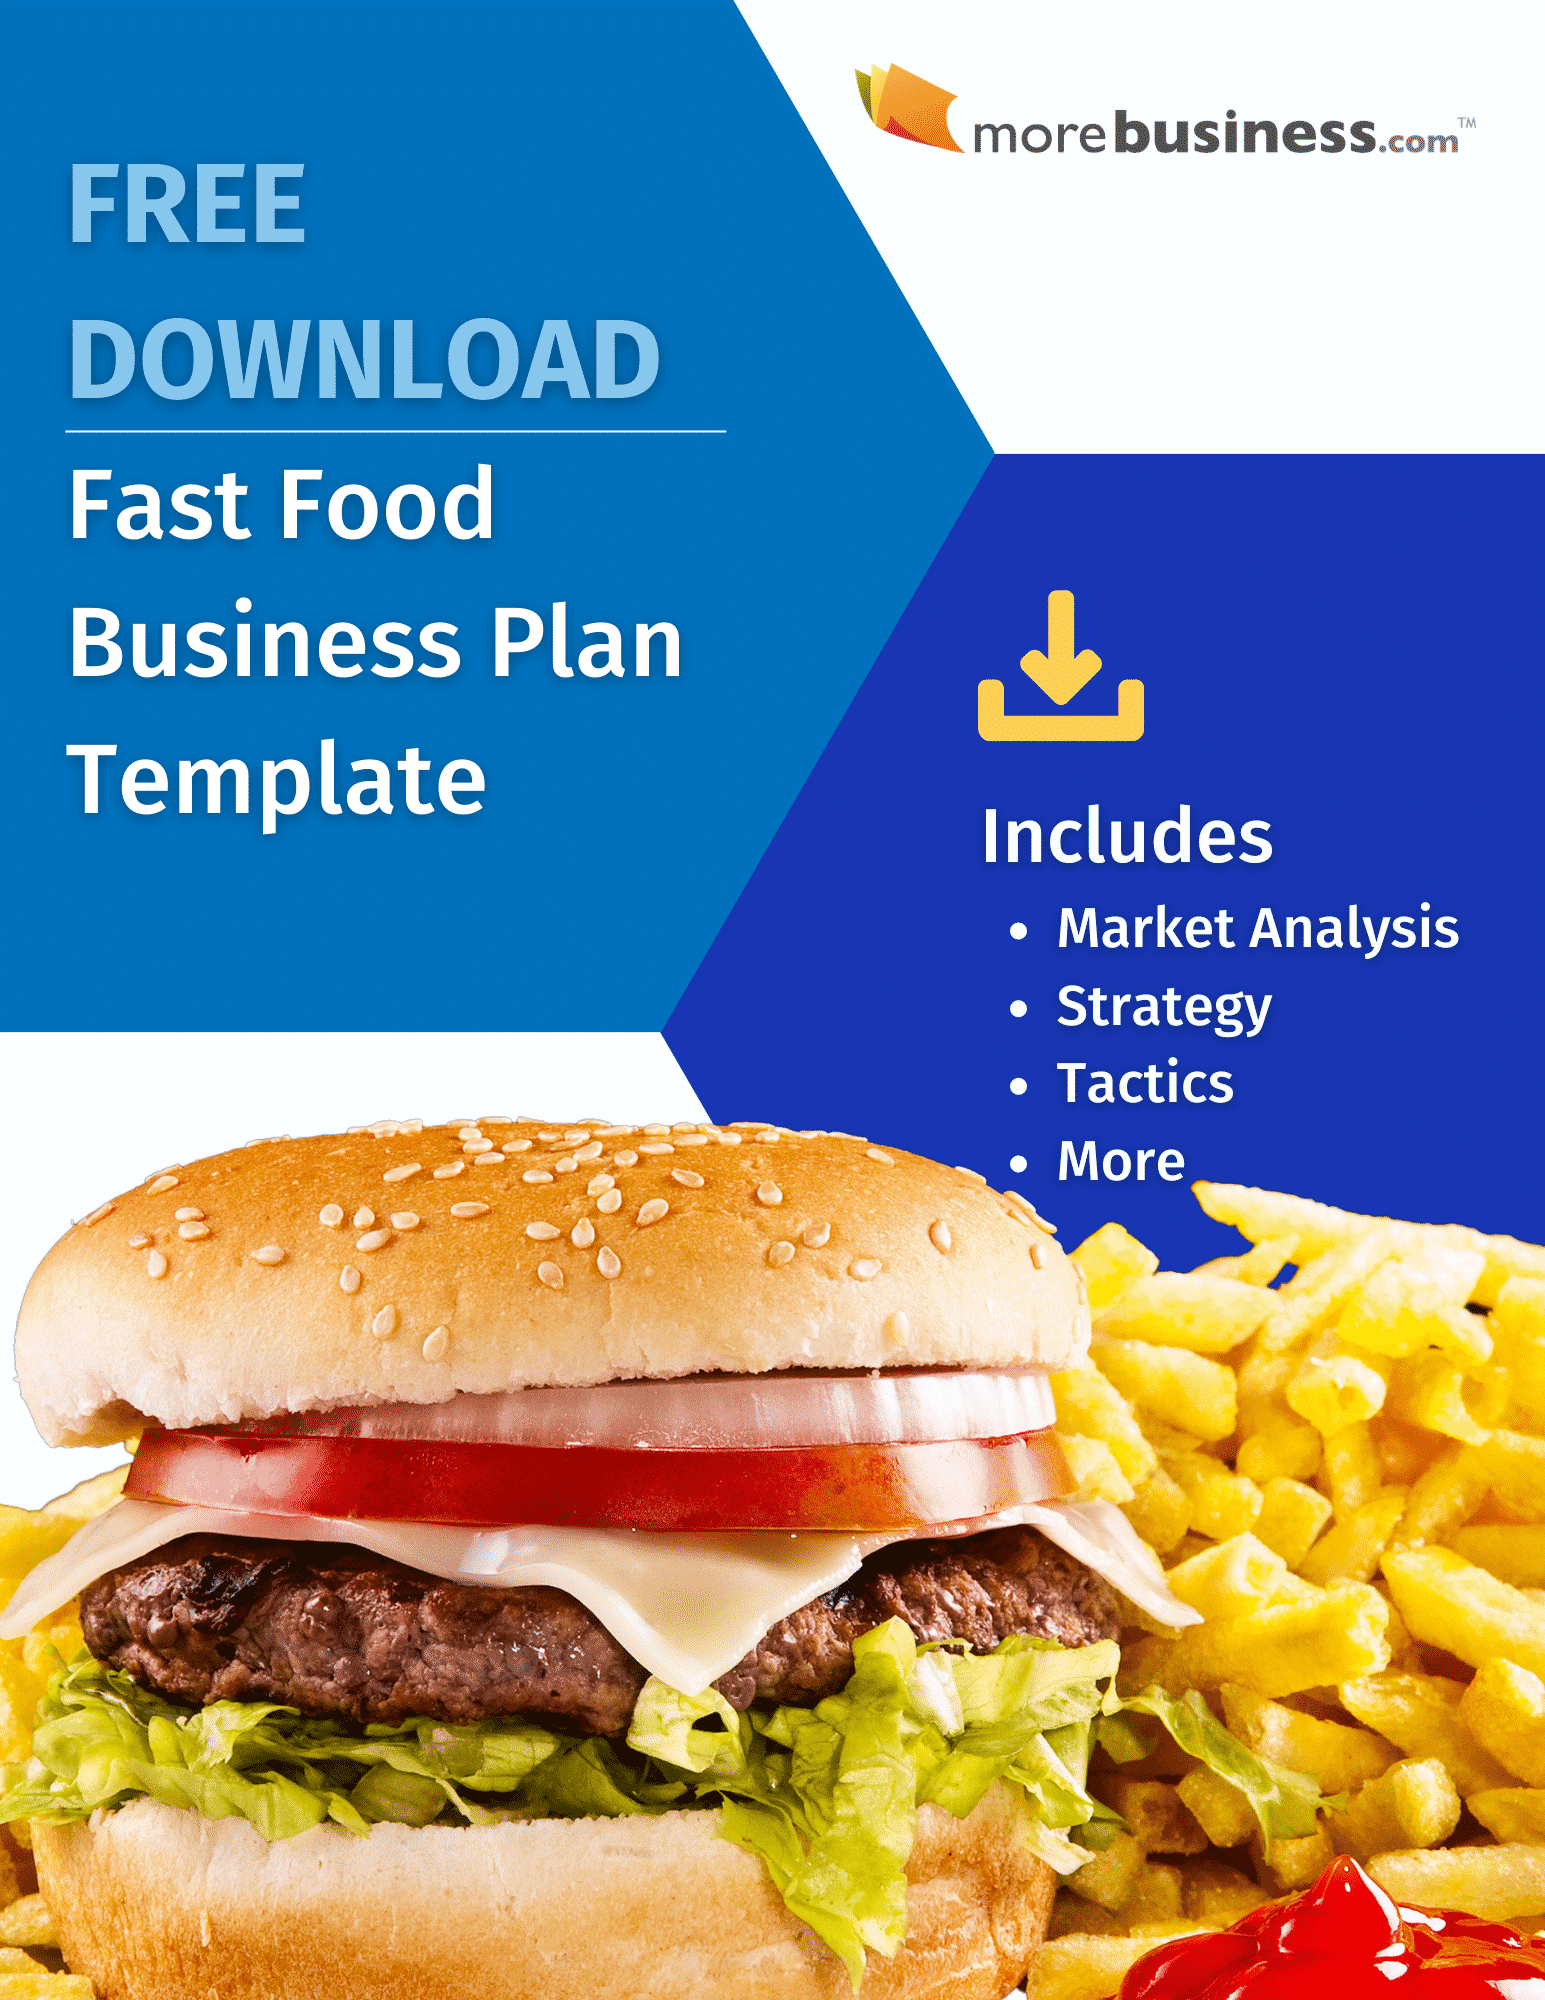 Fast Food Restaurant Business Plan  MoreBusiness.com In Why Write A Restaurant Enterprise Plan